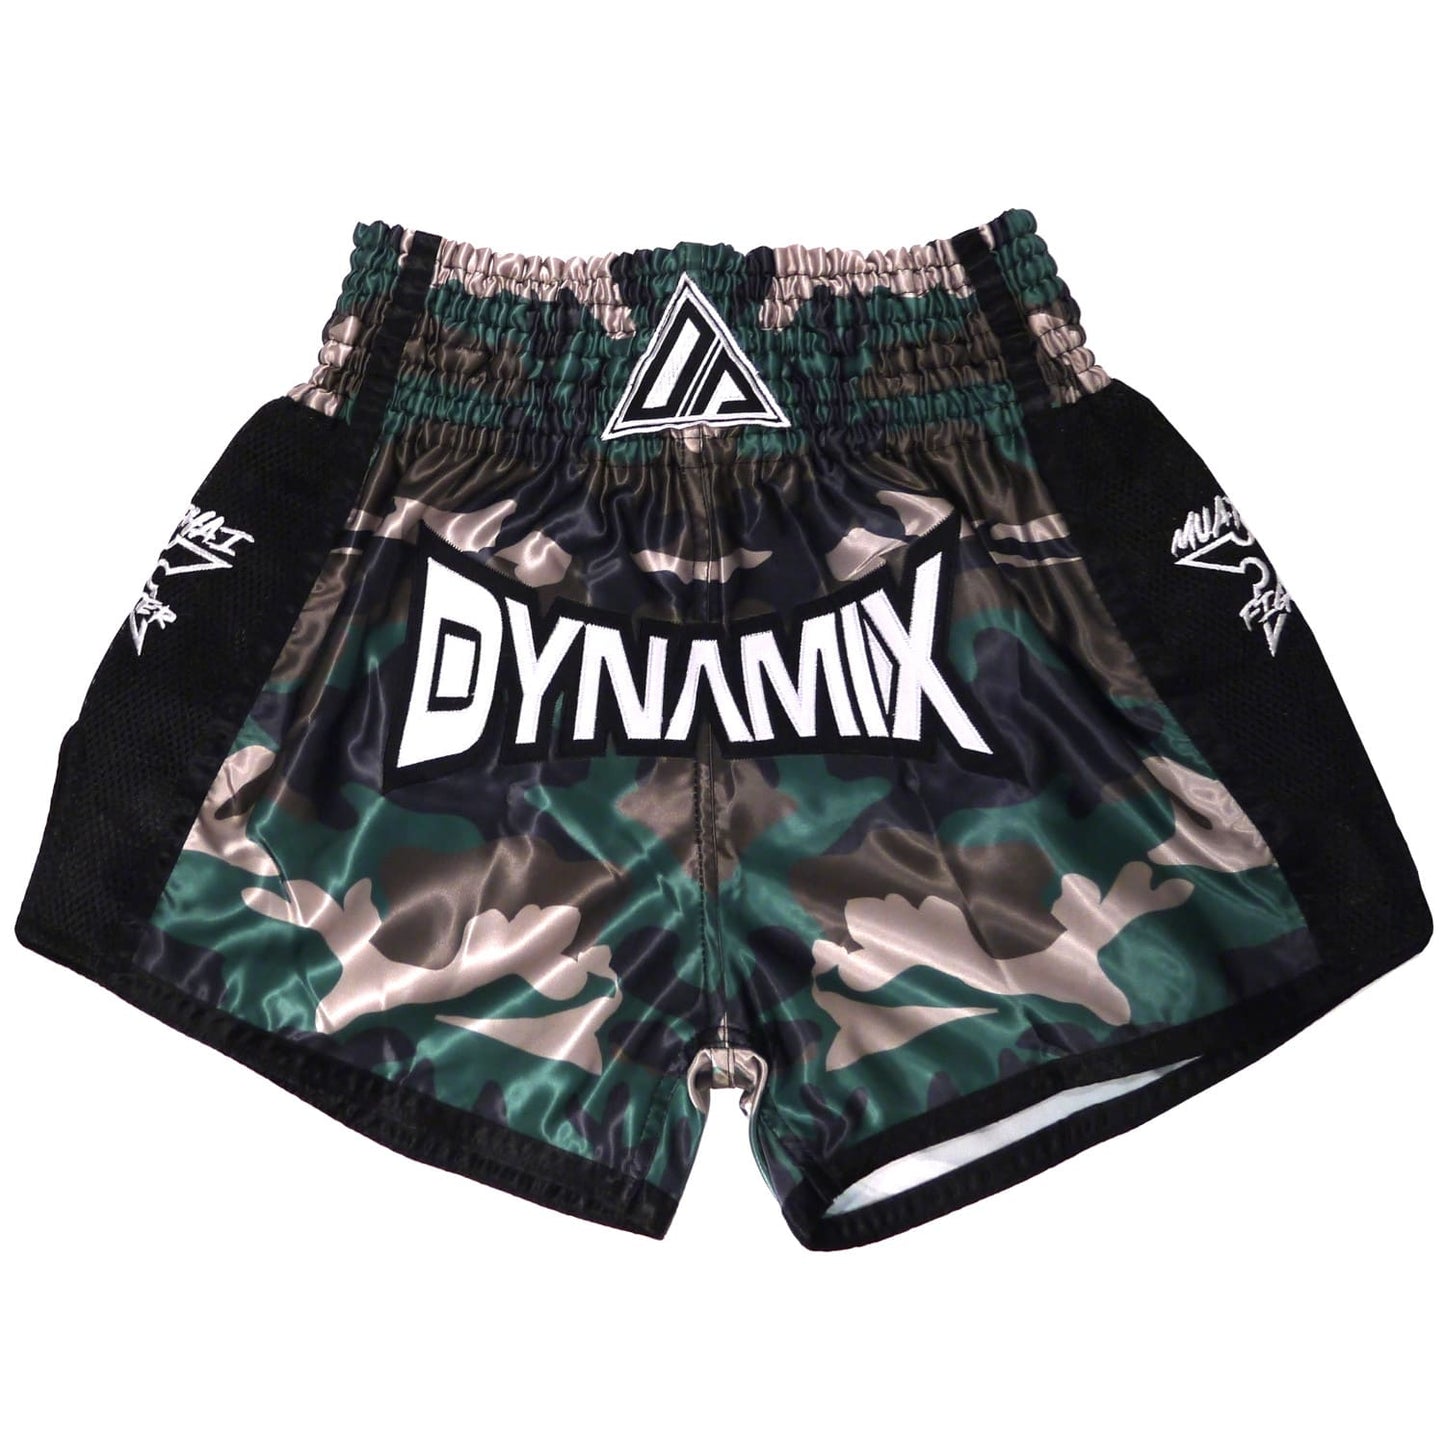 Dynamix Athletics Muay Thai Shorts Military - Green Camo